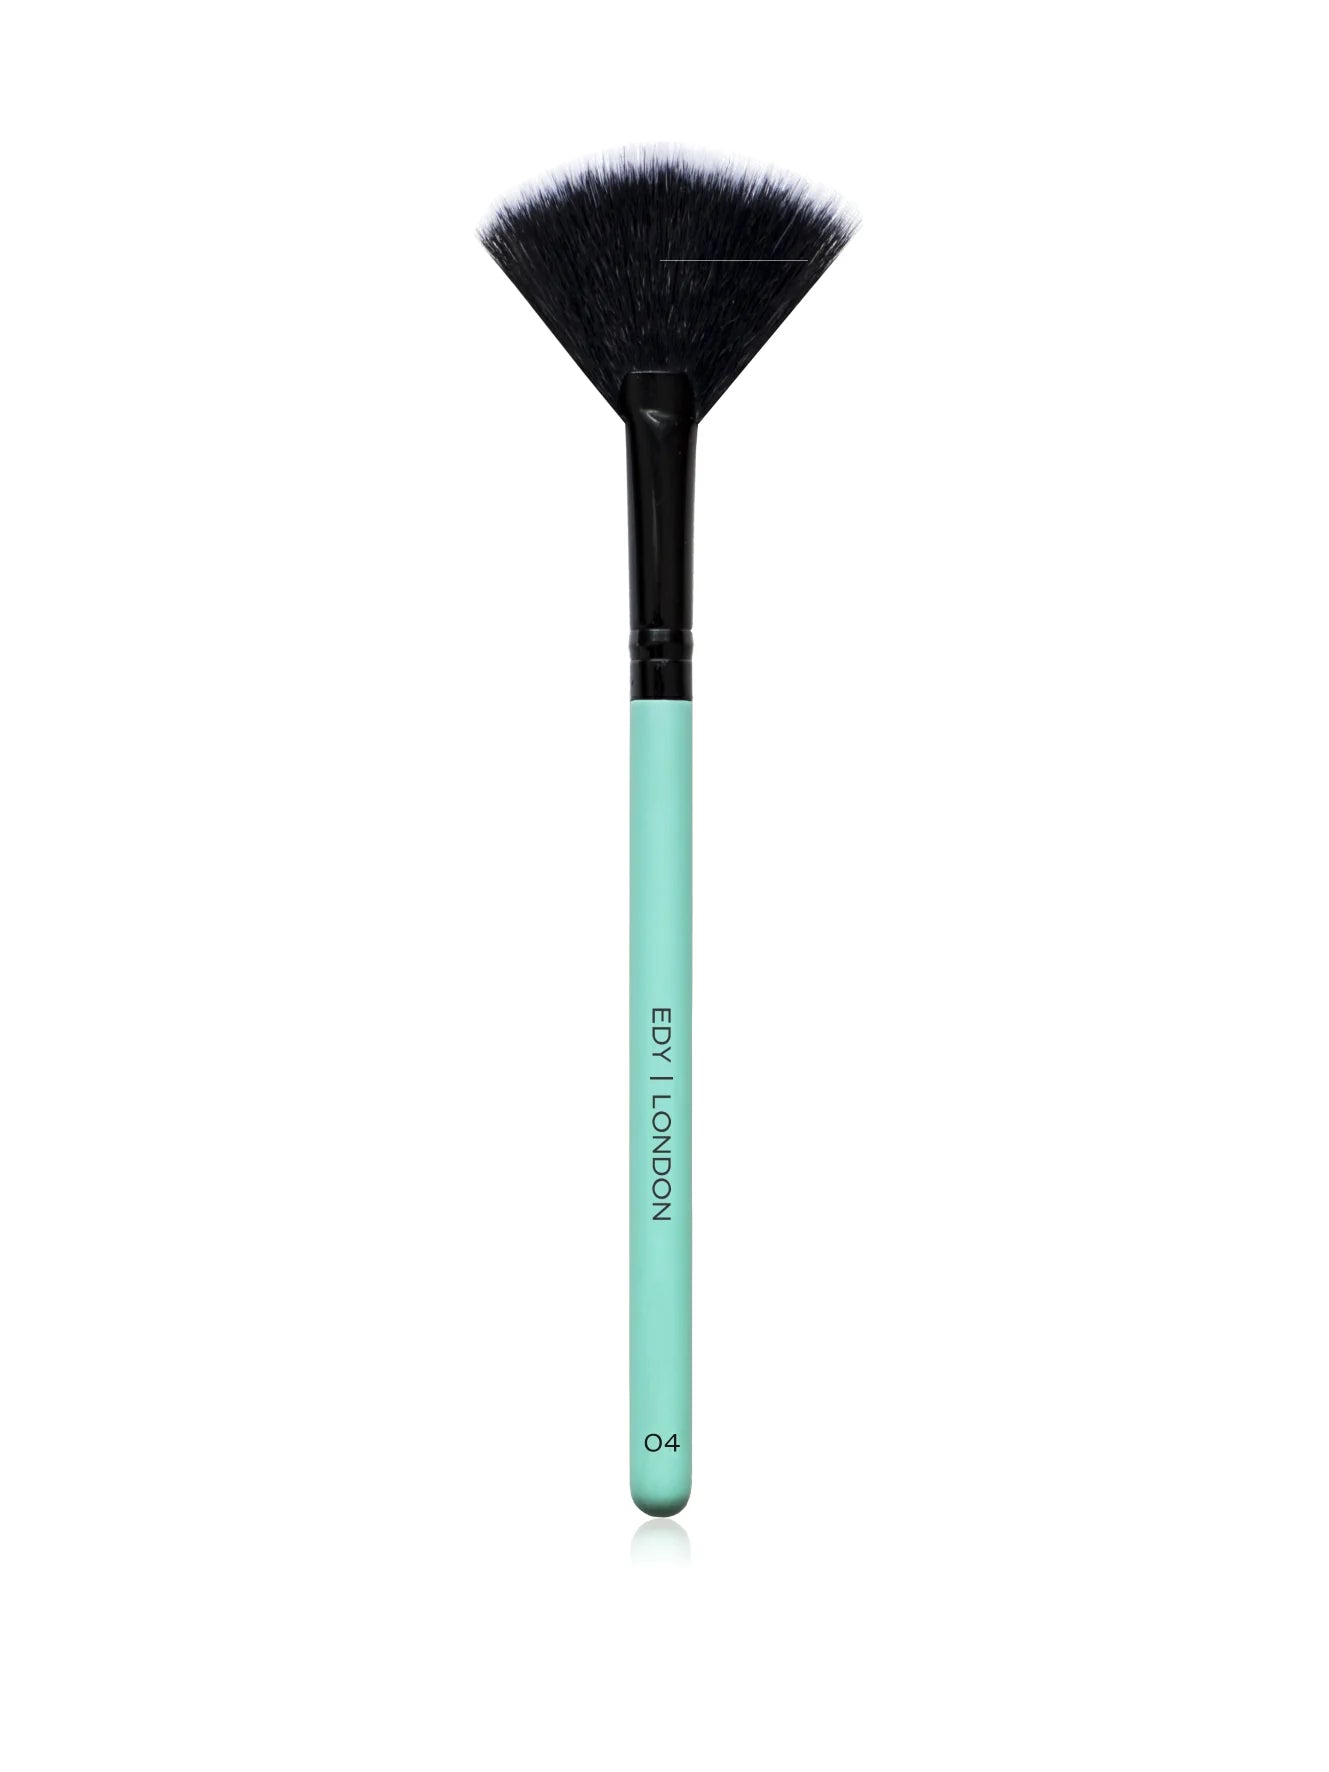 Small Fan Brush 04 Make-up Brush EDY LONDON Turquoise   - EDY LONDON PRODUCTS UK - The Best Makeup Brushes - shop.edy.london